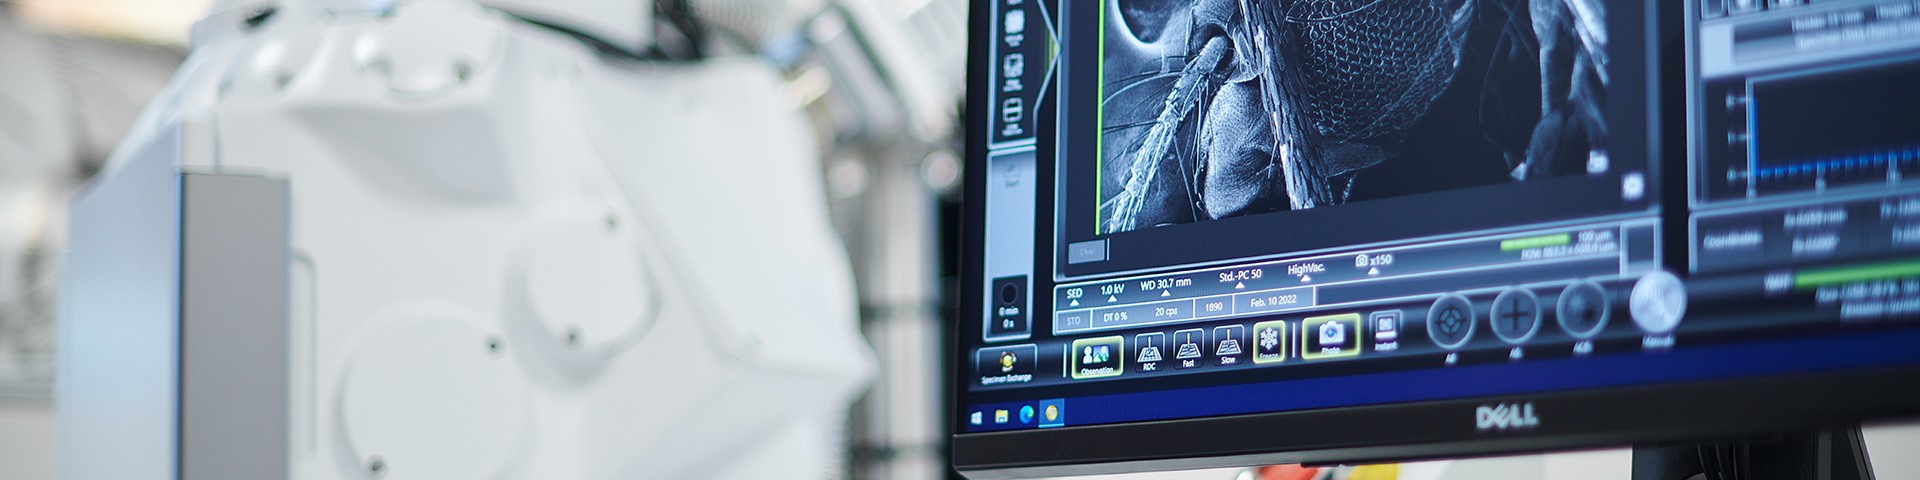 Computer displaying an ultrasound